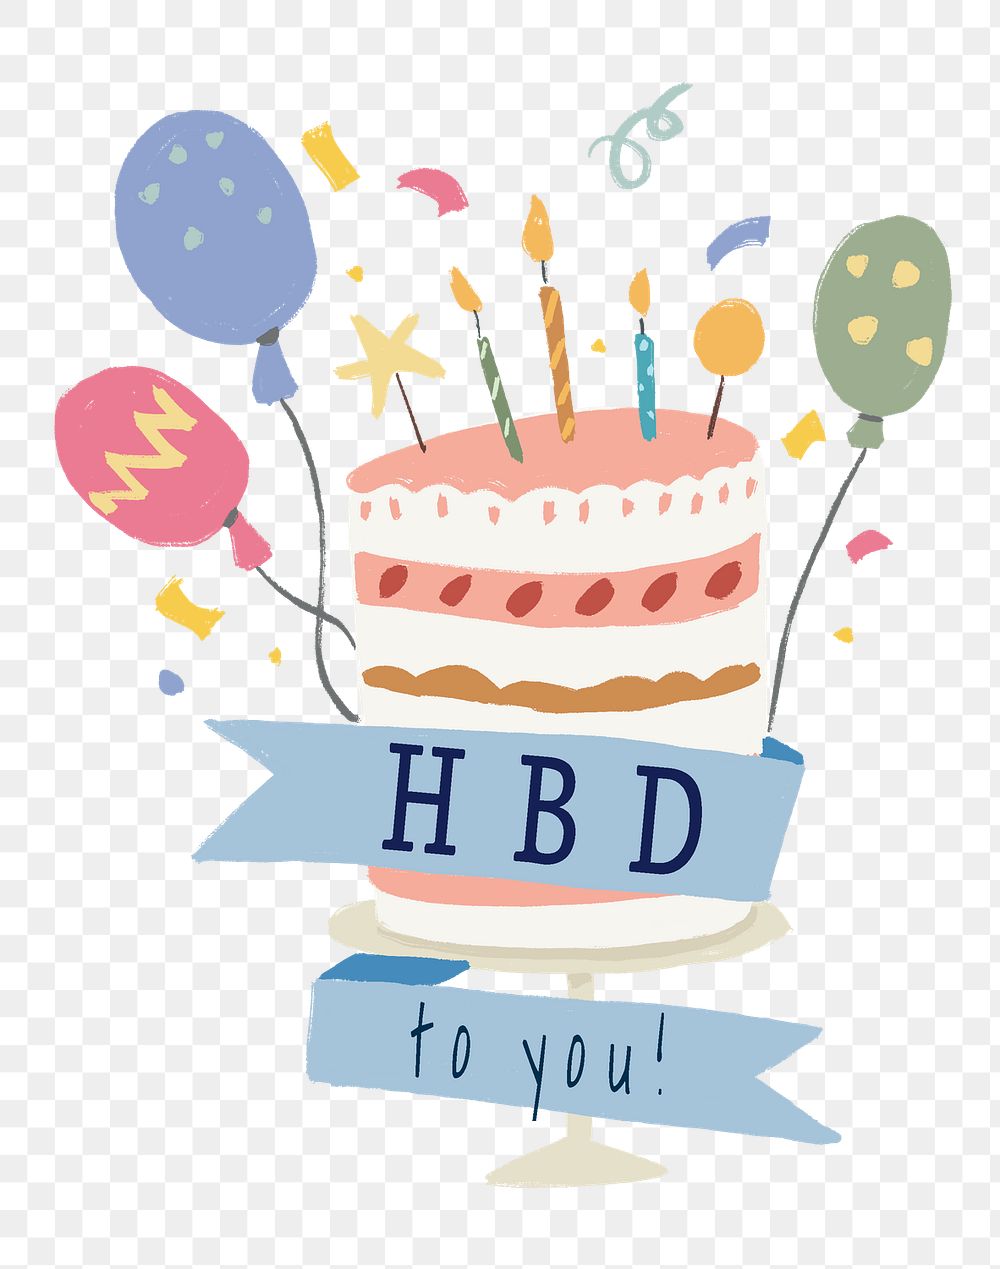 Birthday cake PNG sticker, Happy Birthday message